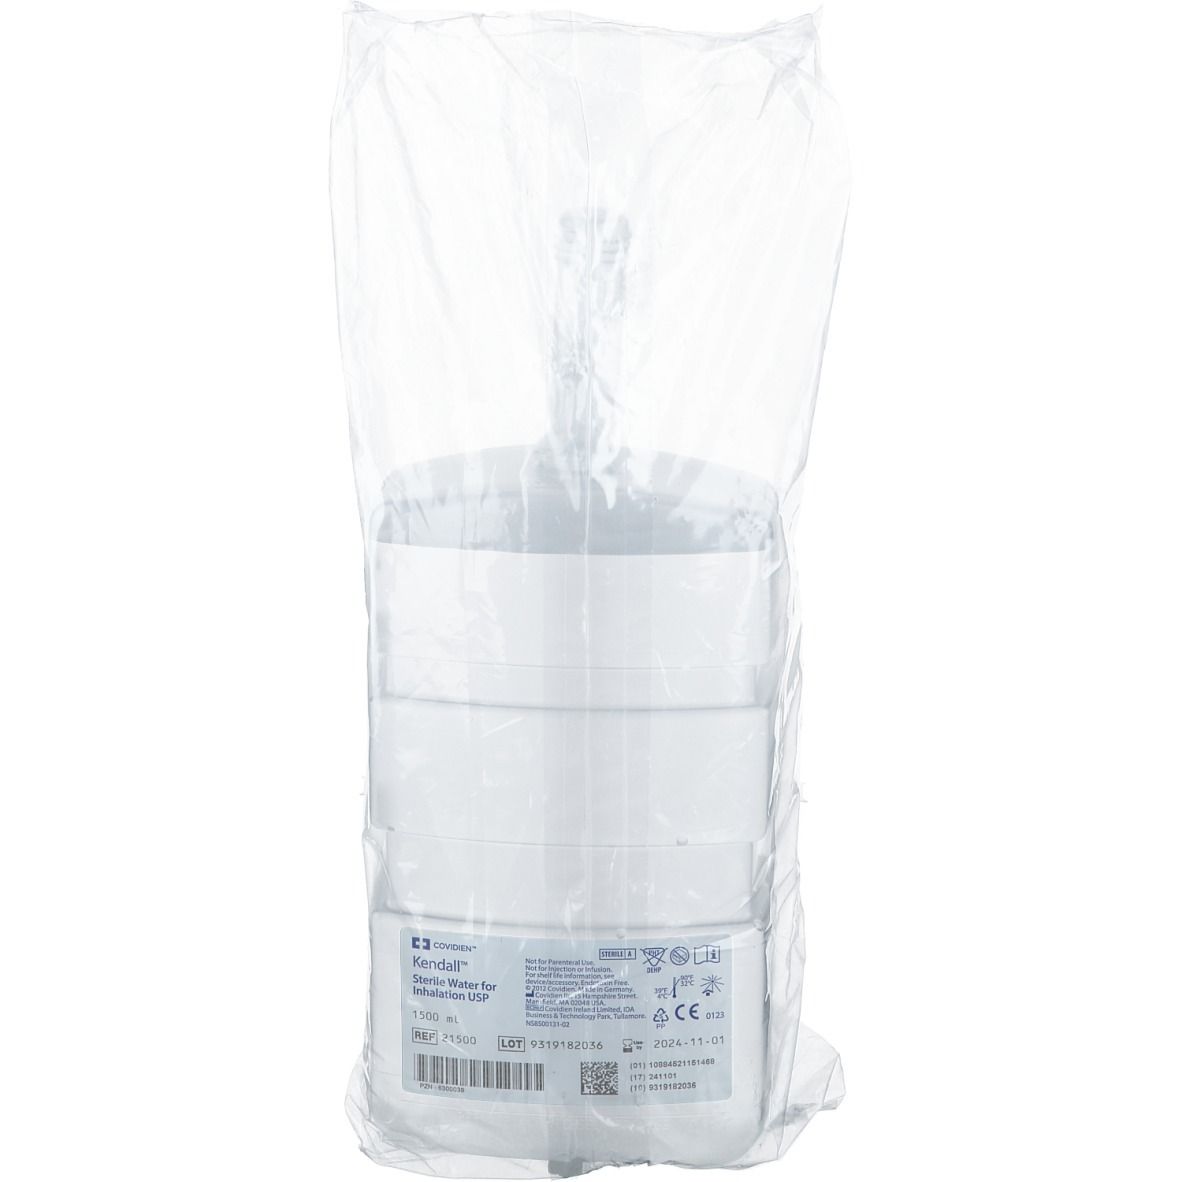 Respiflo Universalflasche Aqua destilata 1500 ml